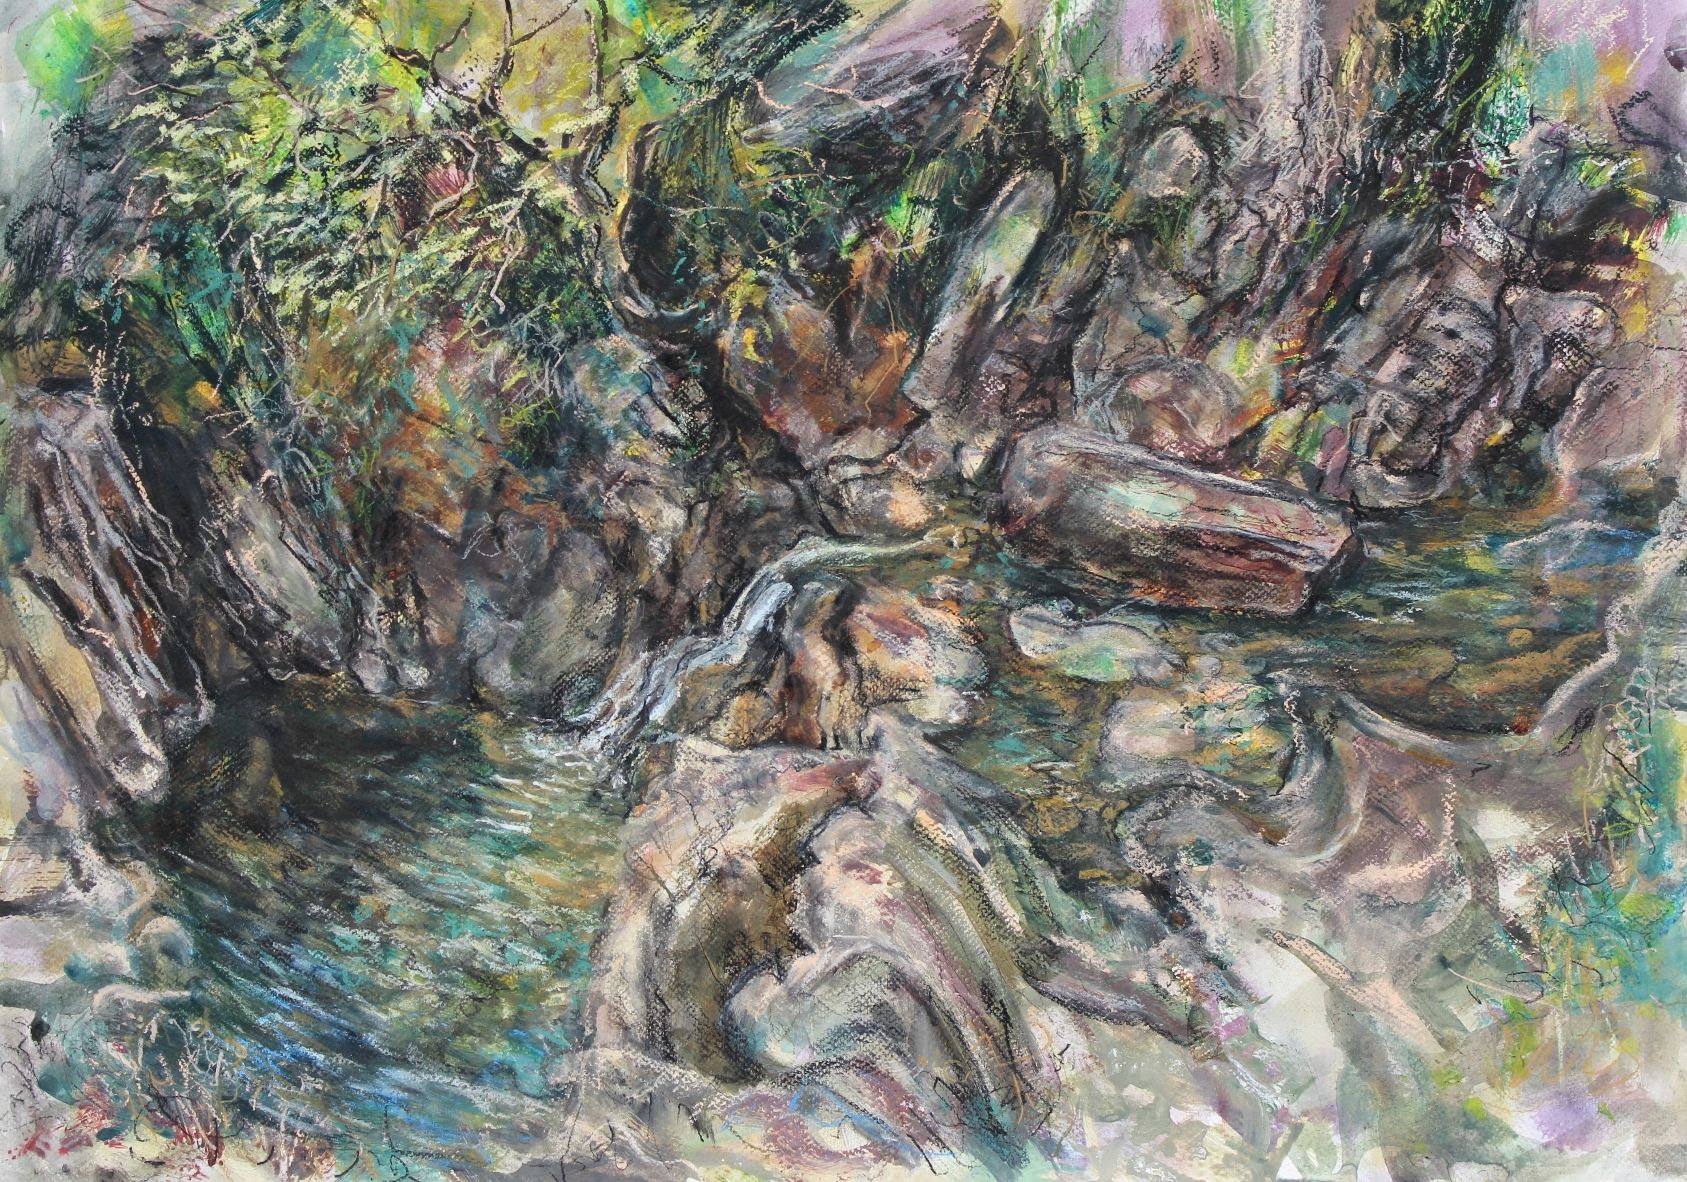 Rocks, Snowdonia. Mixed media on paper. 50x70cm.